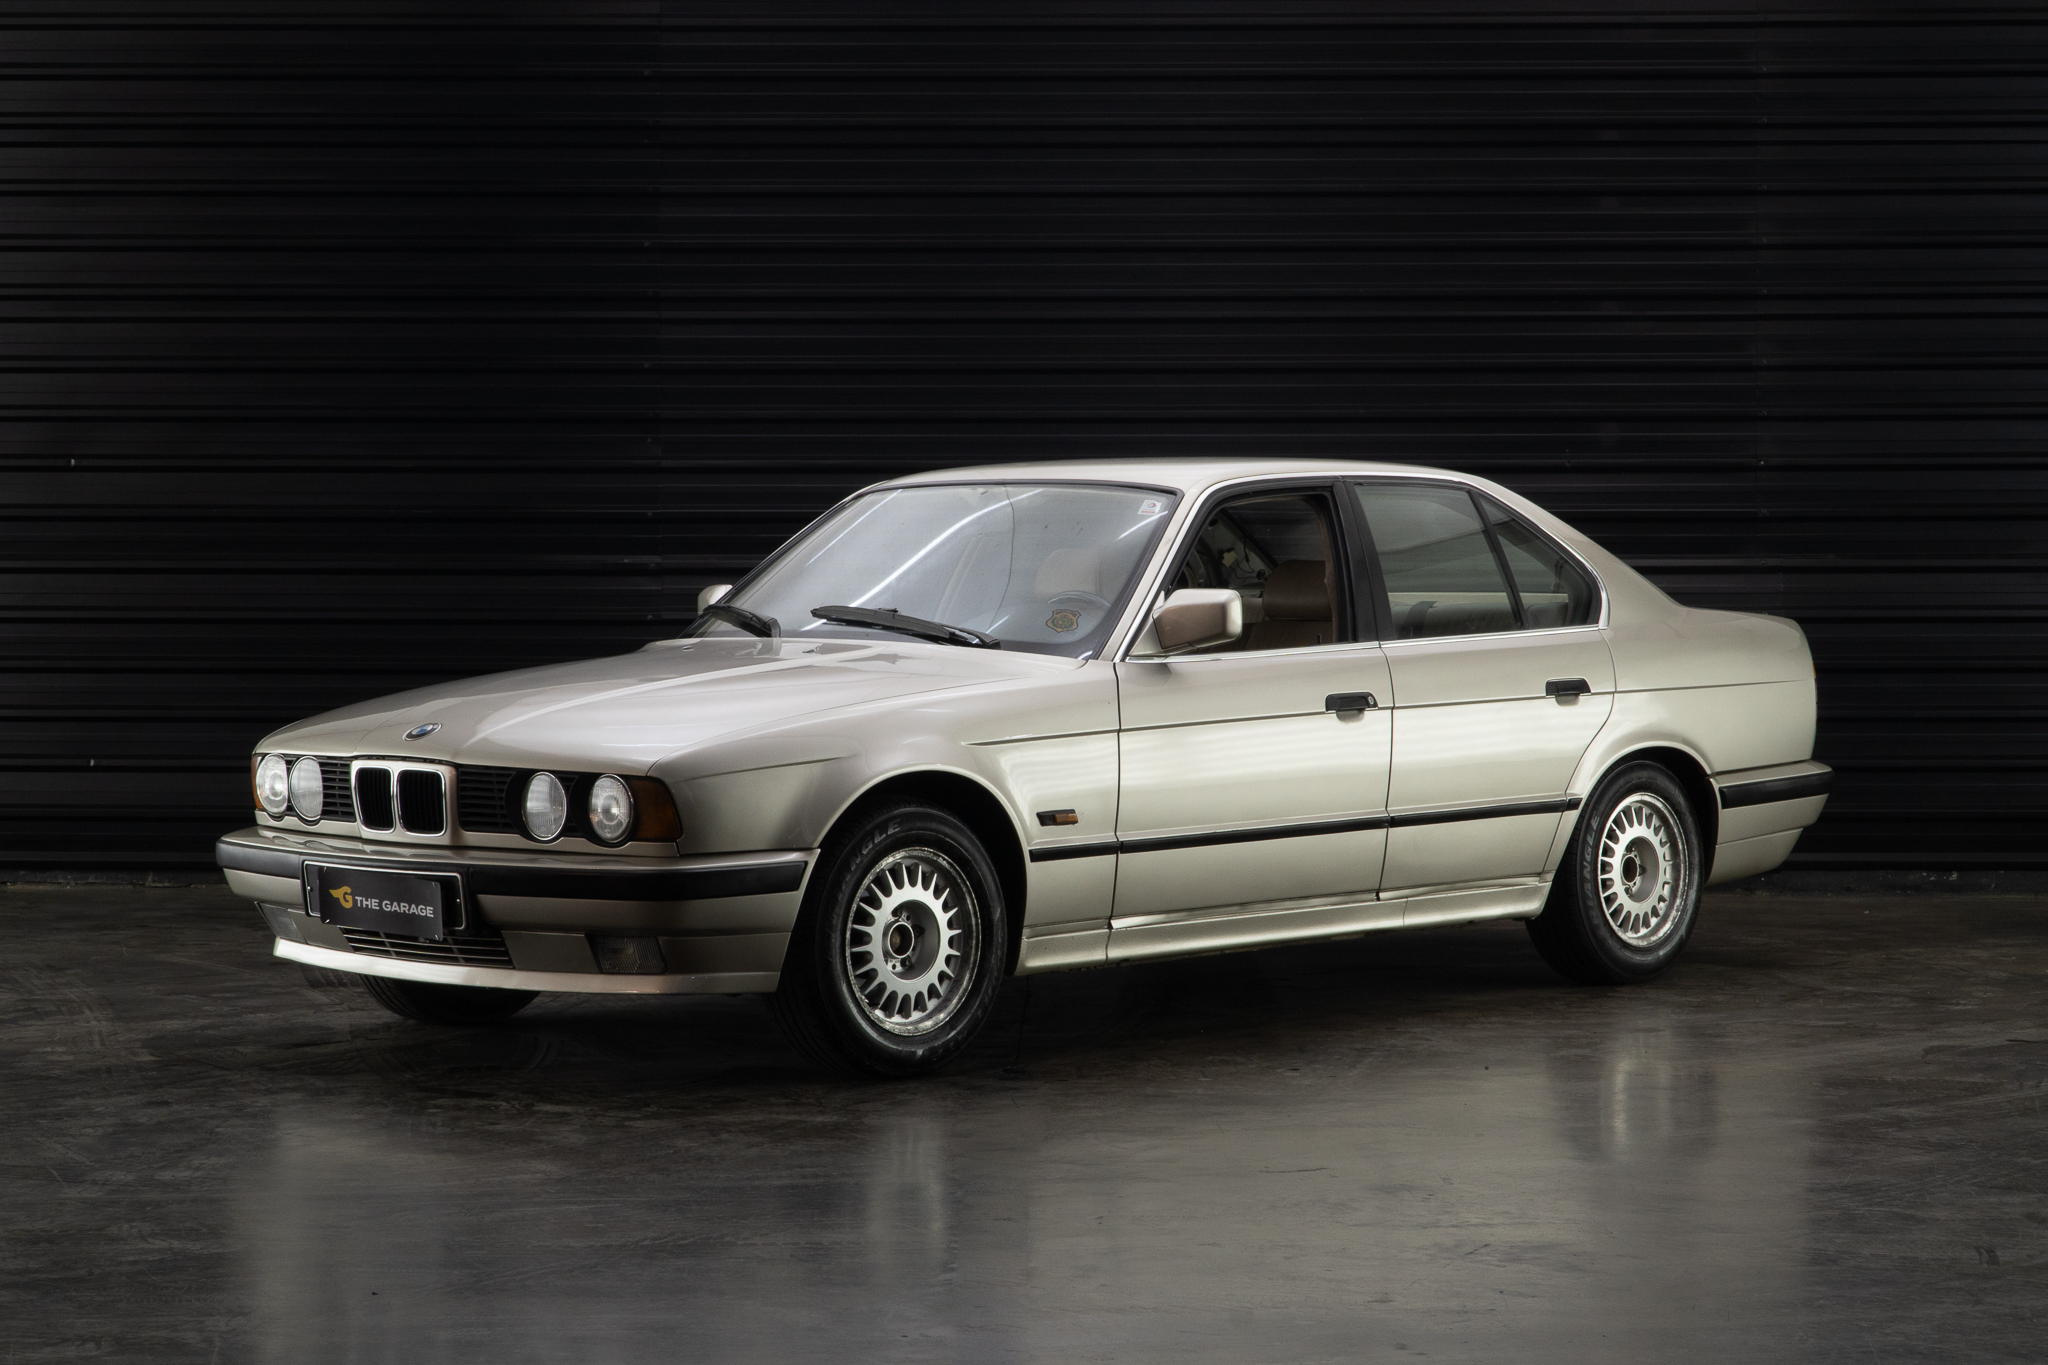 1989 BMW 524 TD a venda the garage for sale